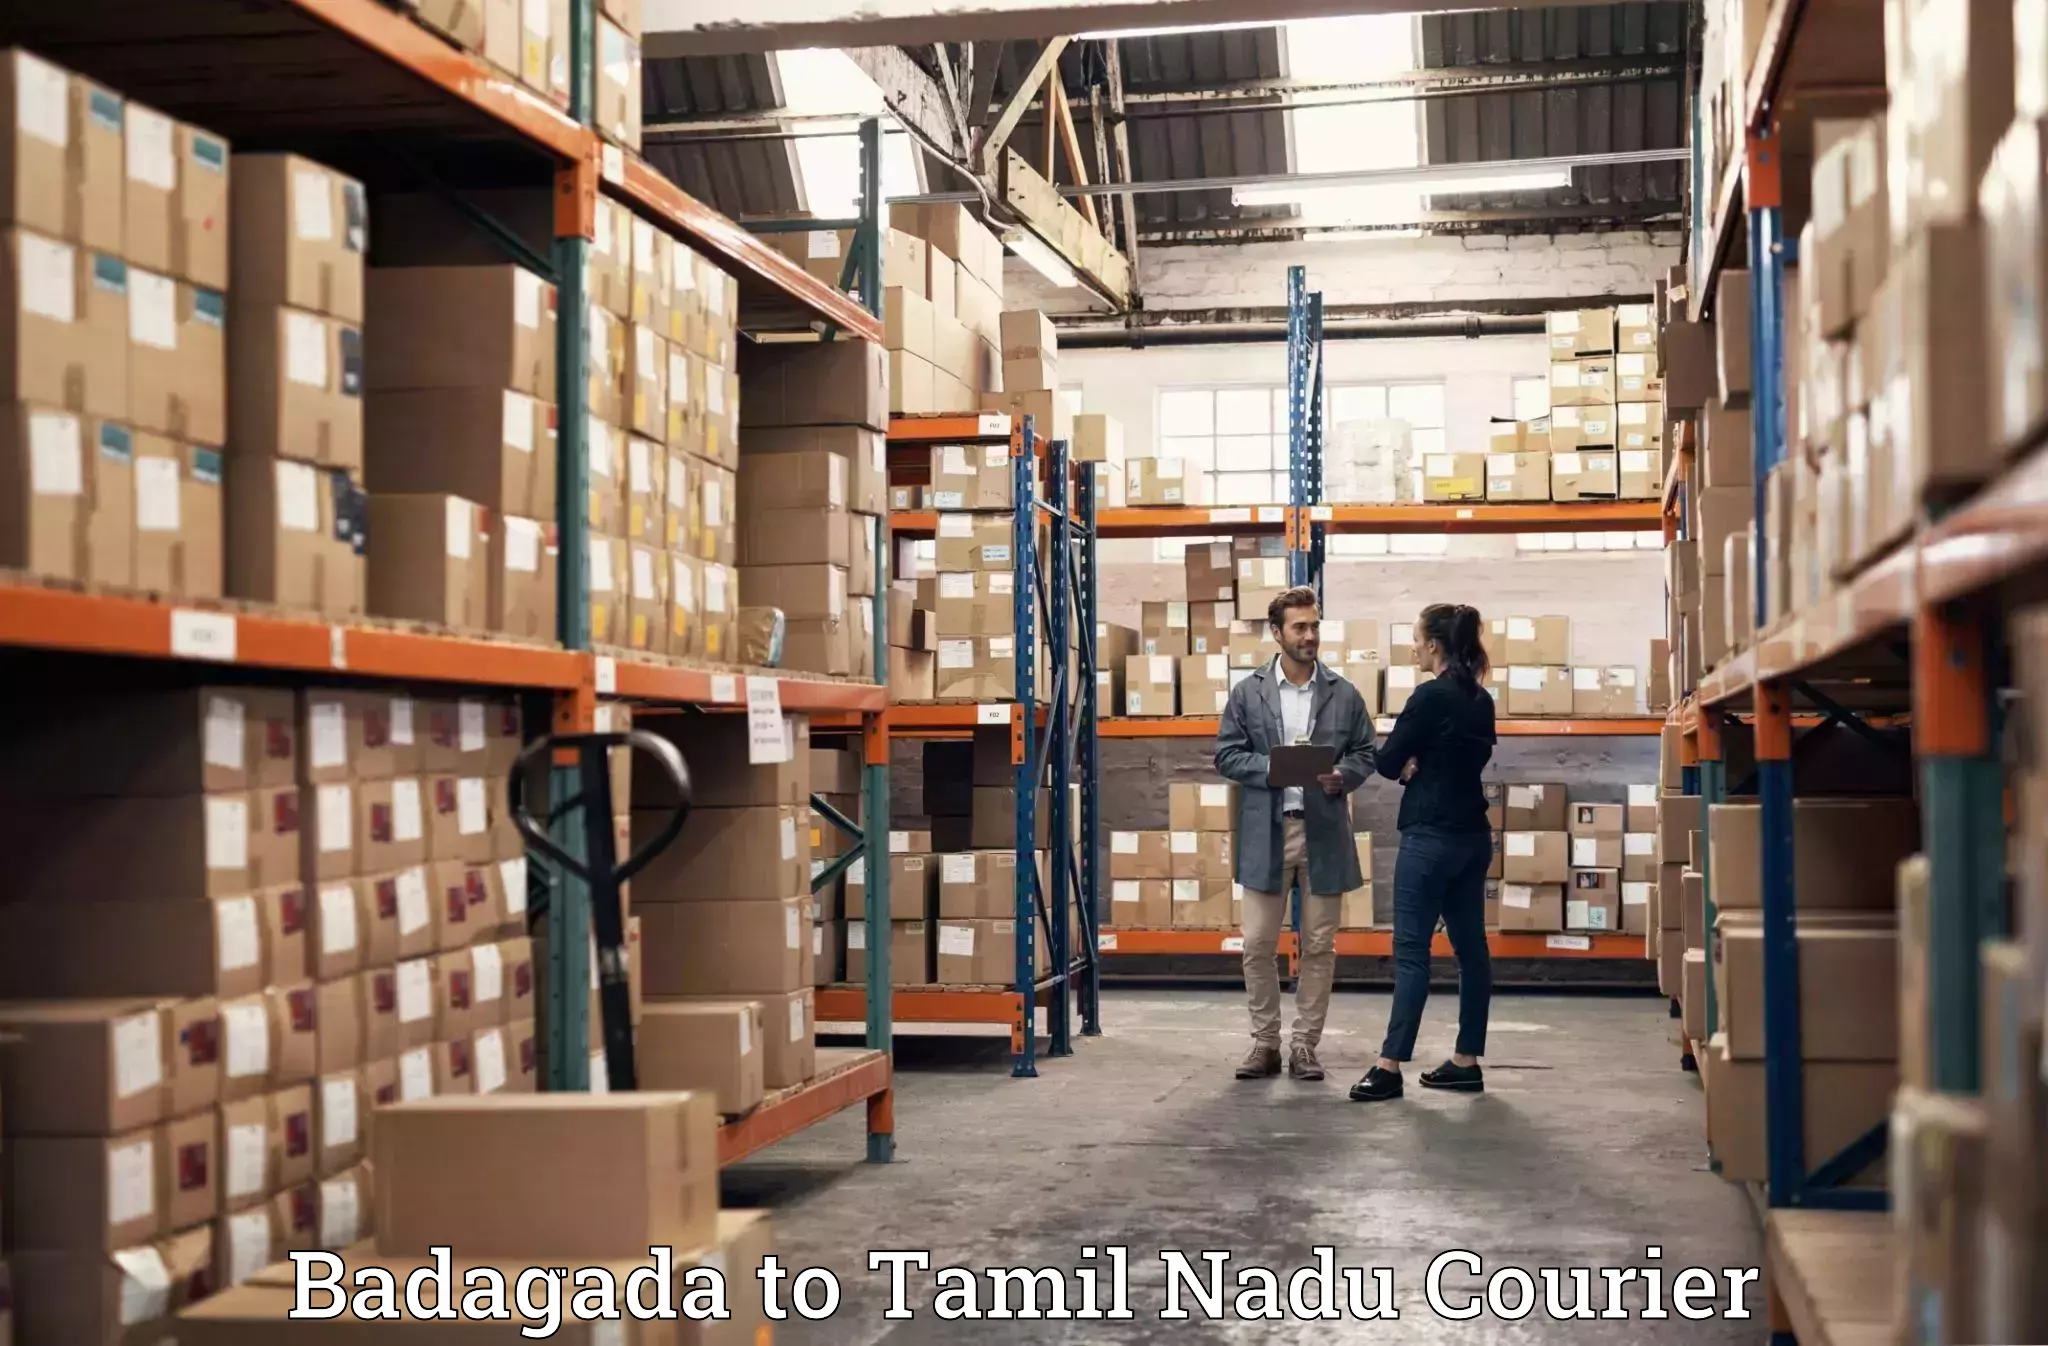 Moving and storage services Badagada to Mettur